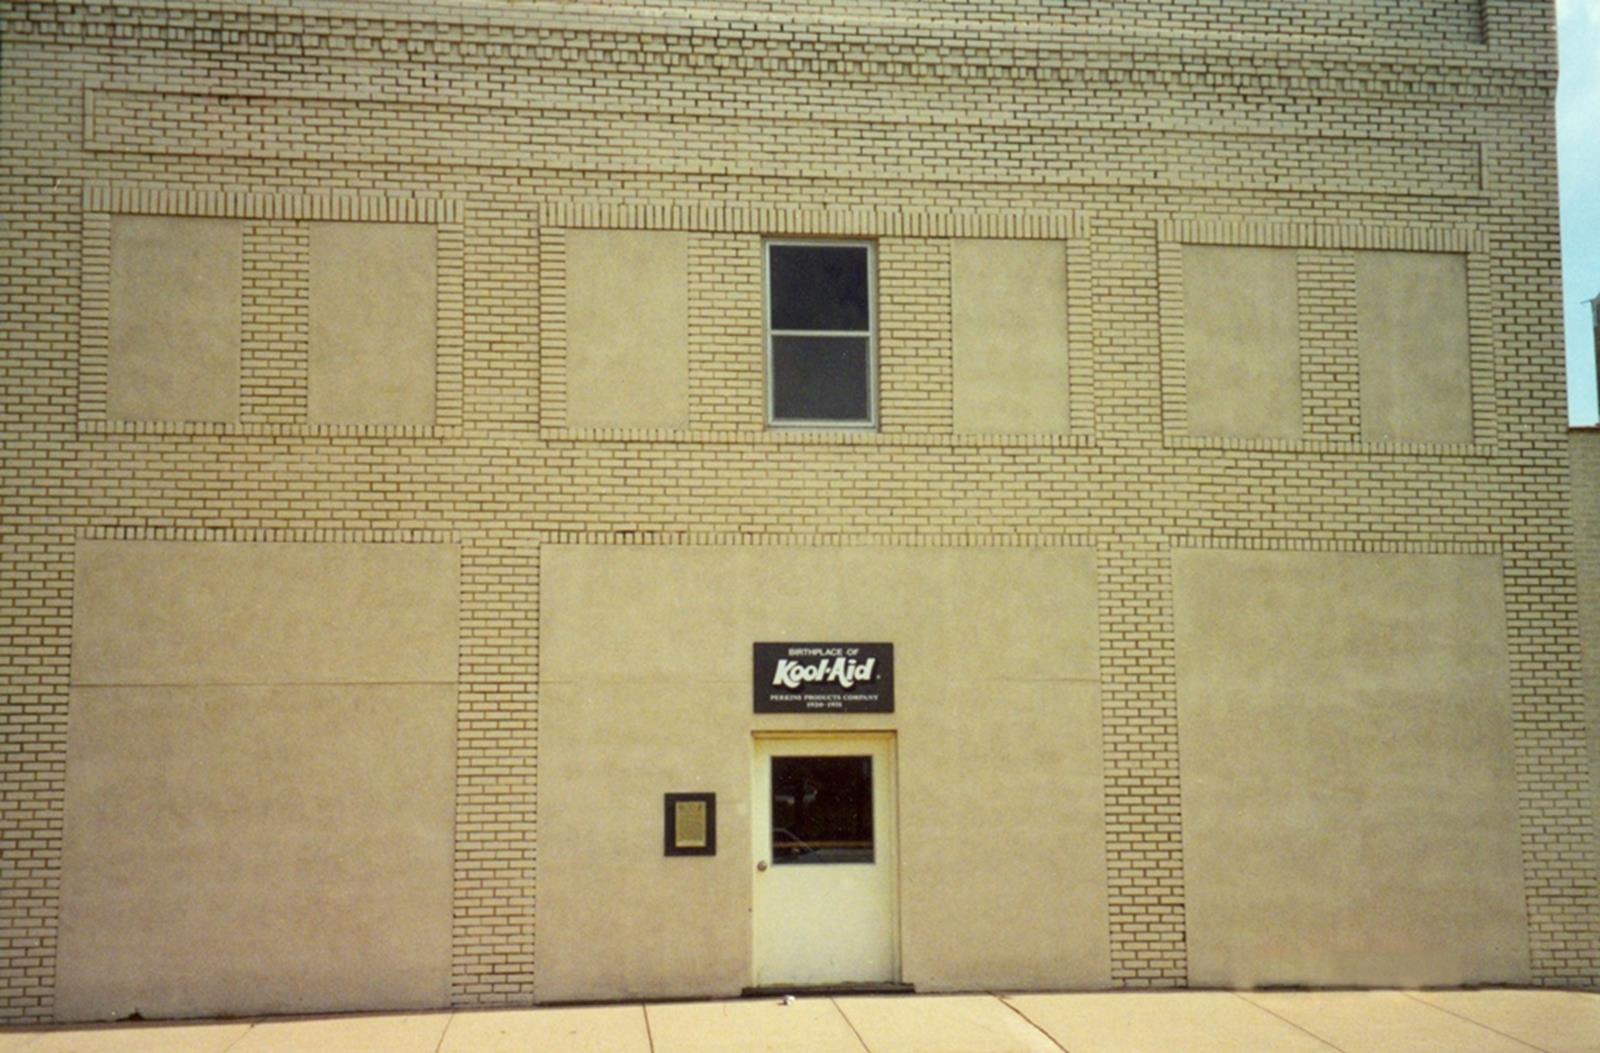 The original building where Edwin Perkins created Kool-Aid. Credit: Nehrams2020 at en.wikipedia